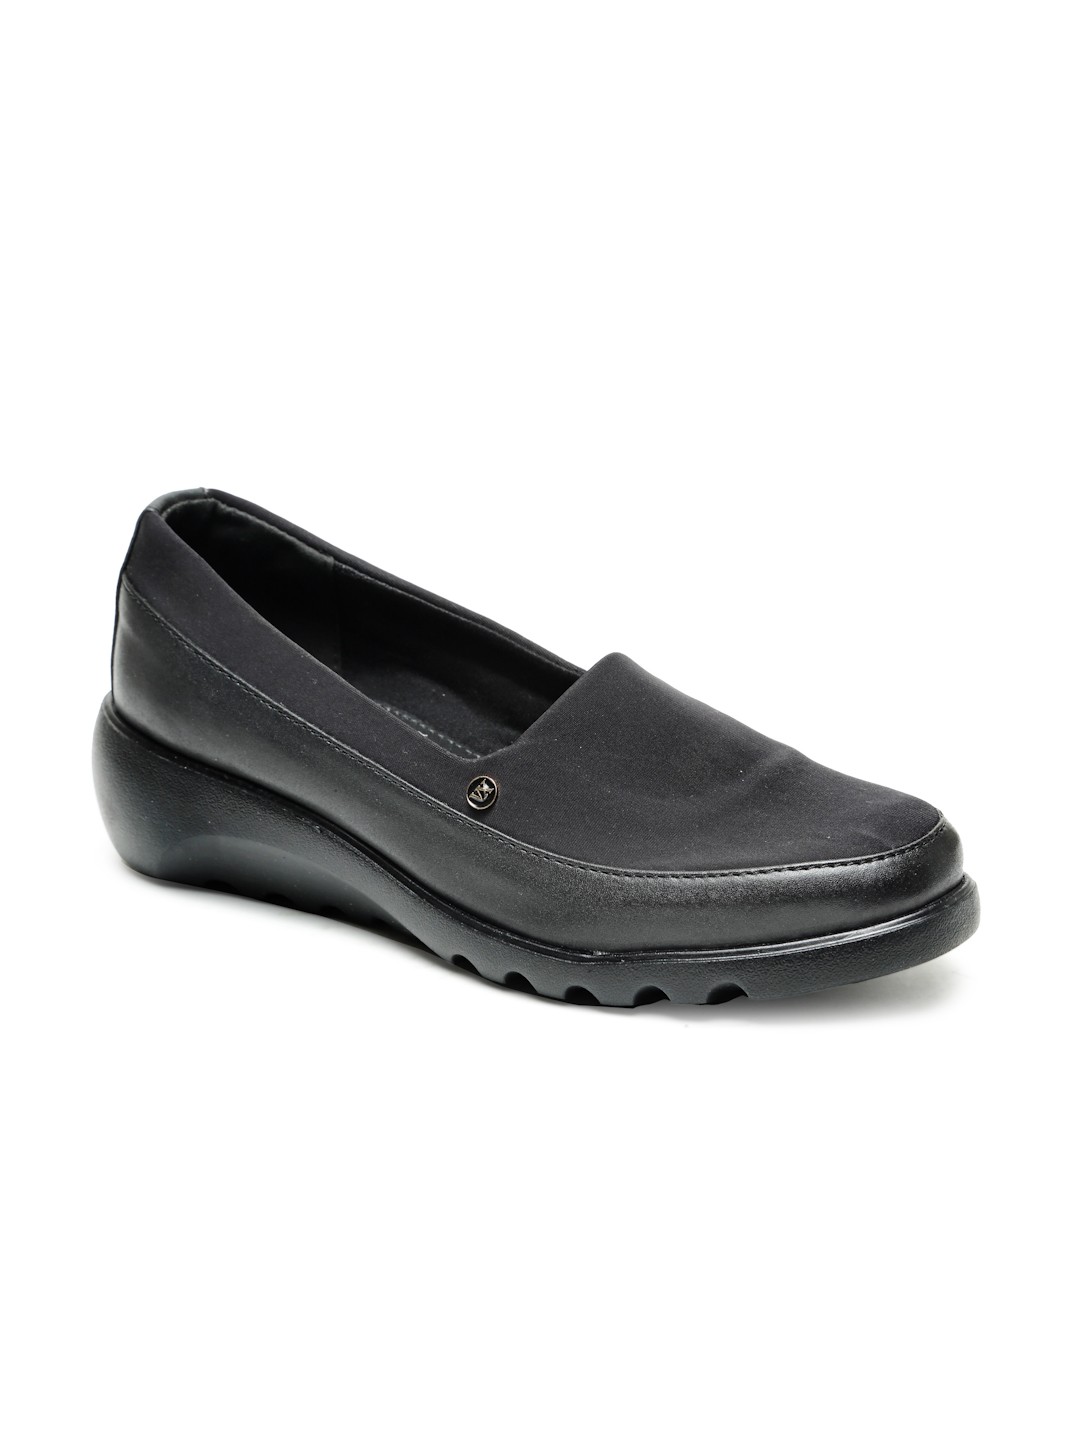 Buy Von Wellx Germany Comfort Women's Black Casual Shoes Elsa Online in Dubai